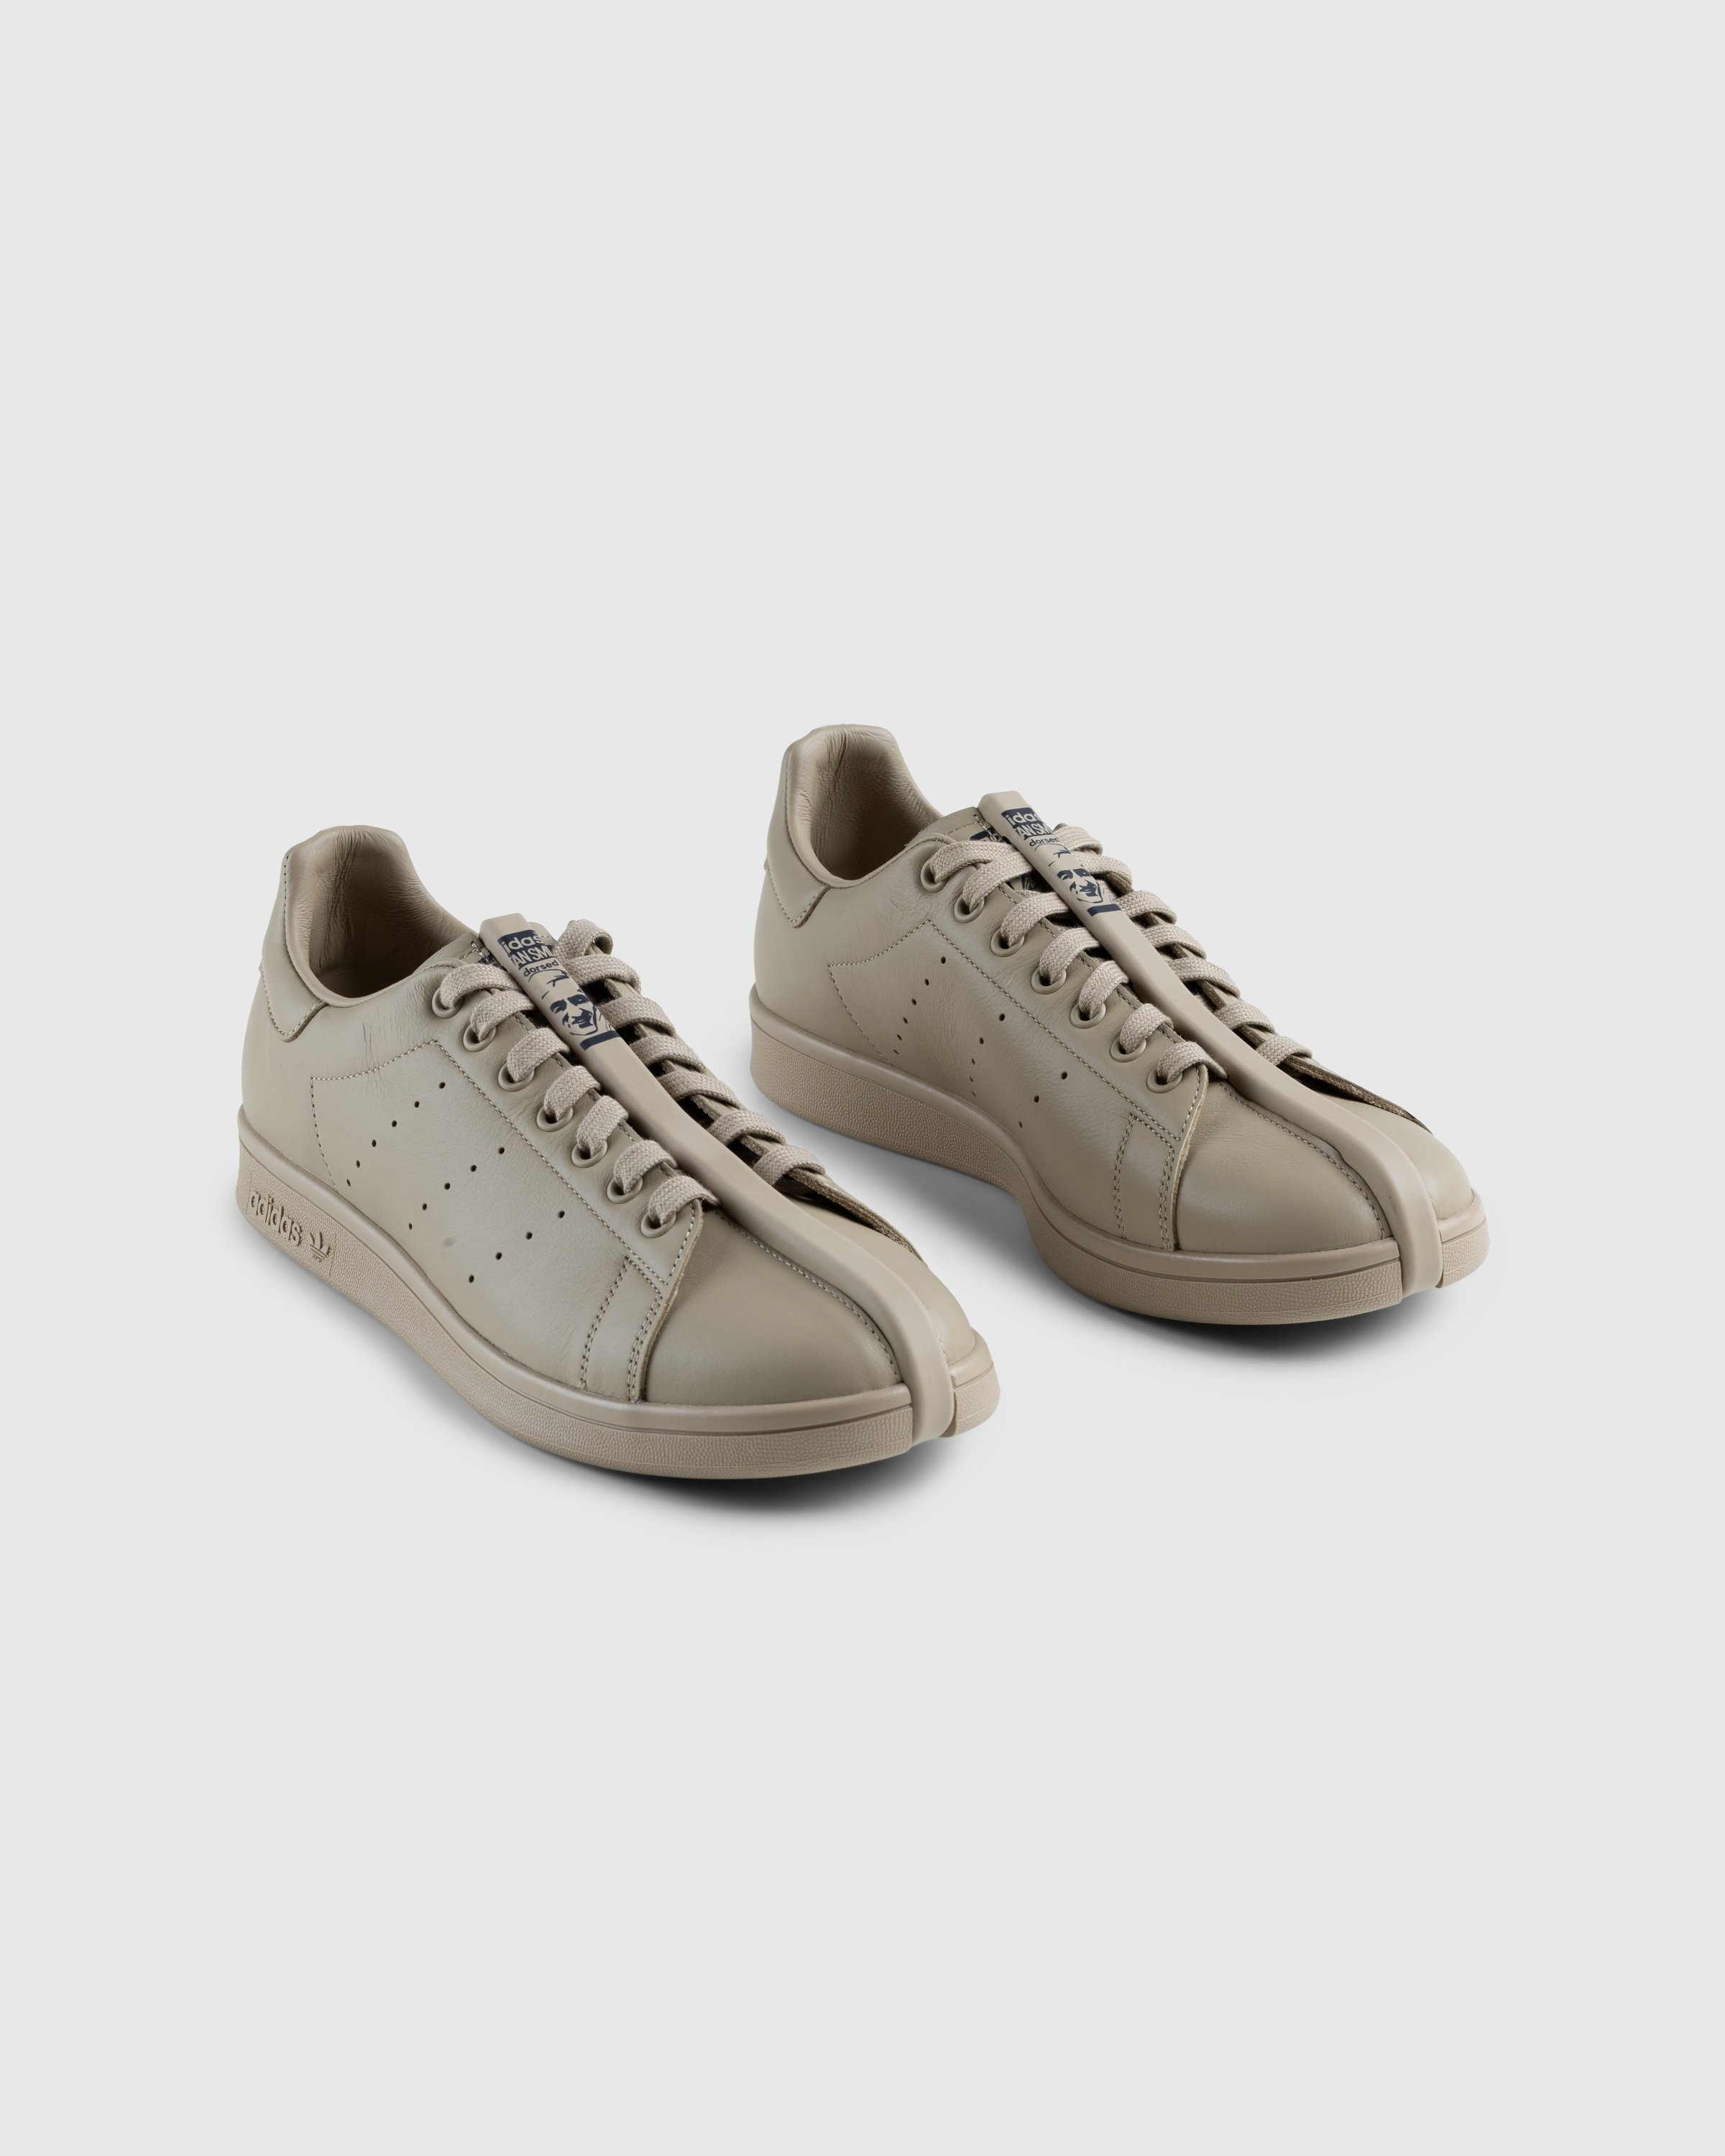 Adidas – CG Split Stan Smith Beige Tone/Core Black - Sneakers - Beige - Image 3